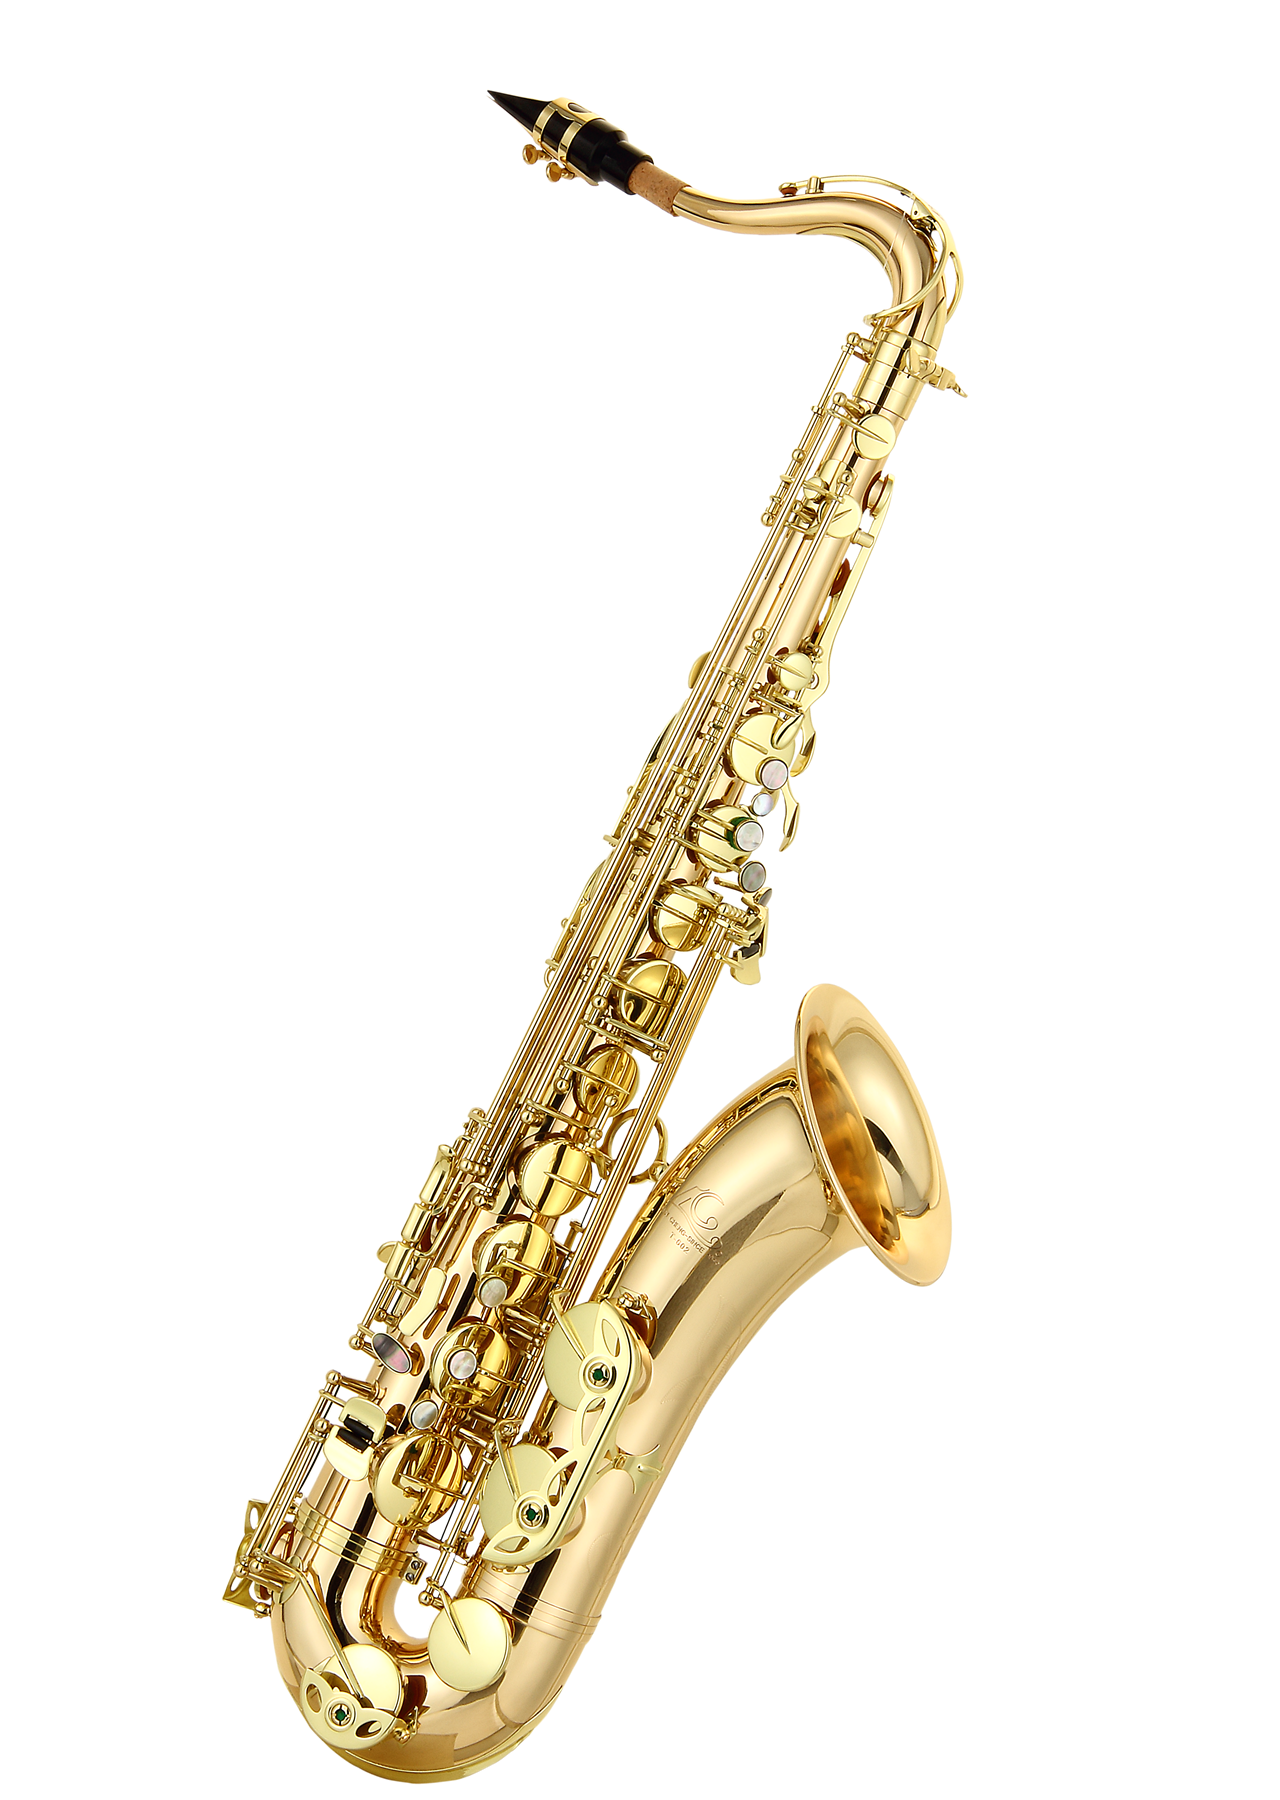 Saxophone Png PNG Image